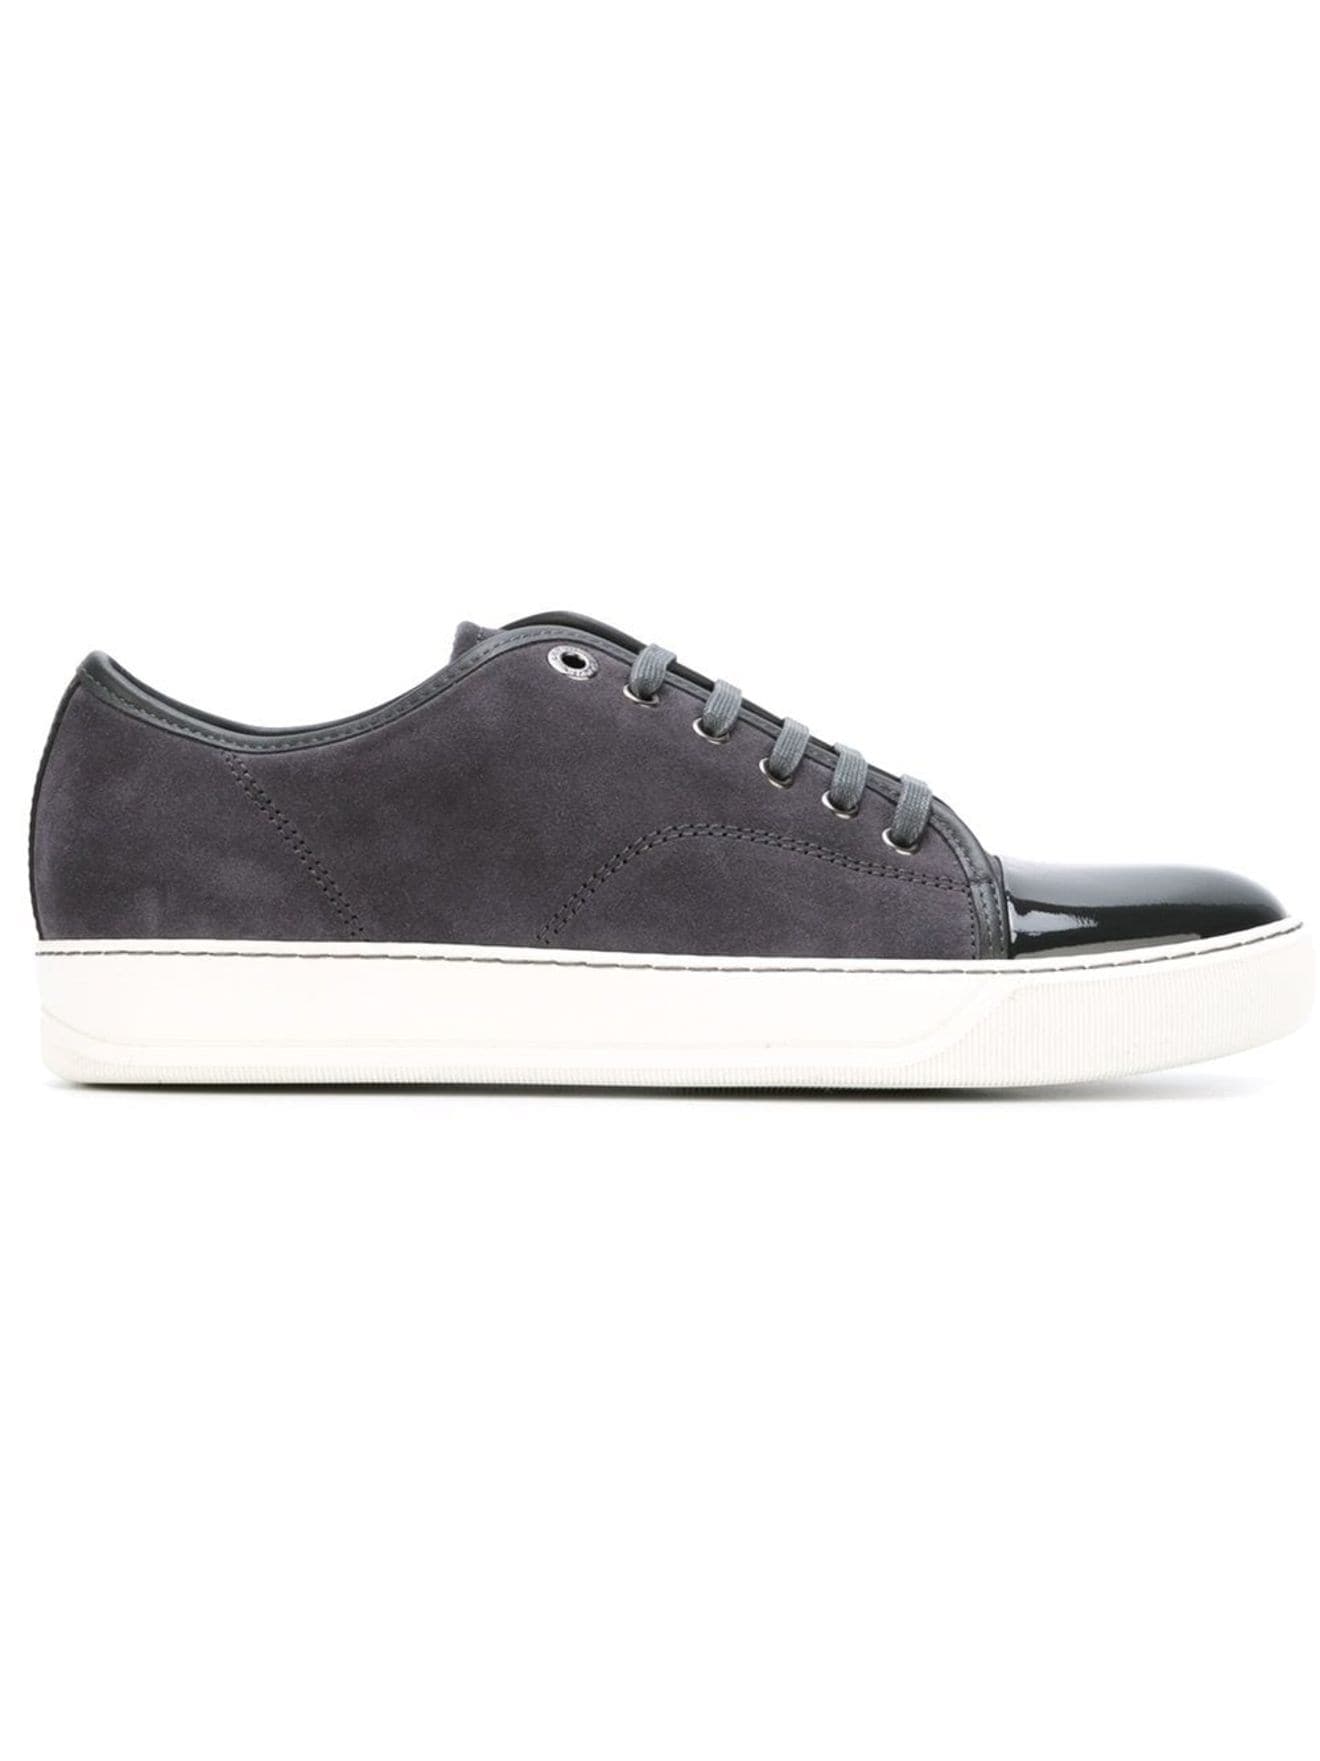 Lanvin DBB1 contrast toe sneakers grey | MODES